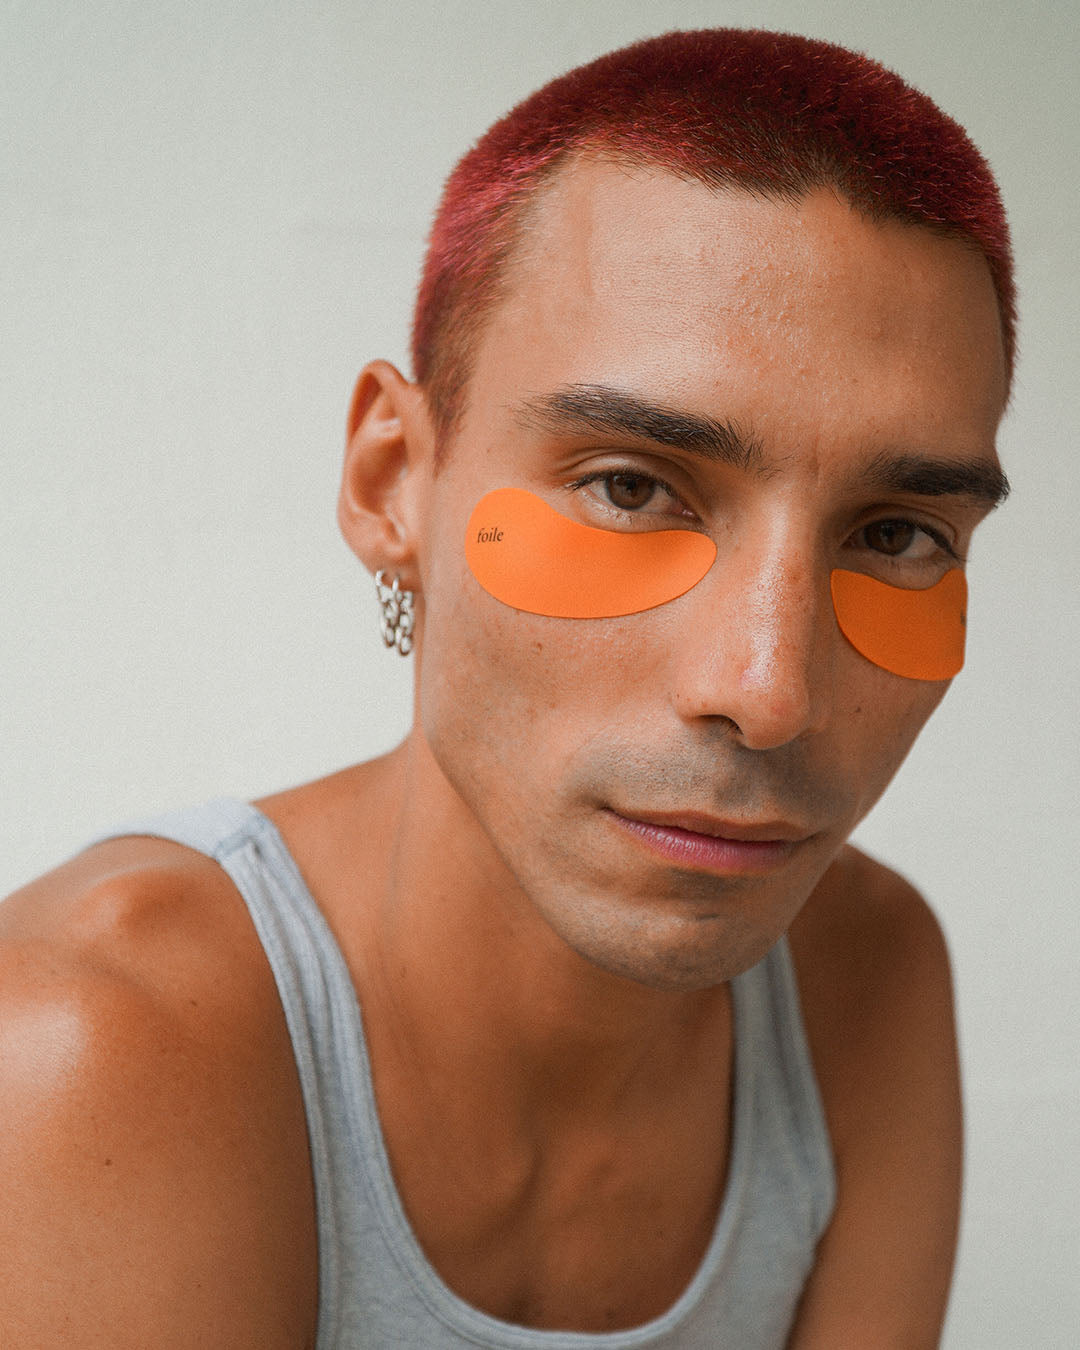 Angel Eye Jellies - Orange Skincare by Foile - Prae Store